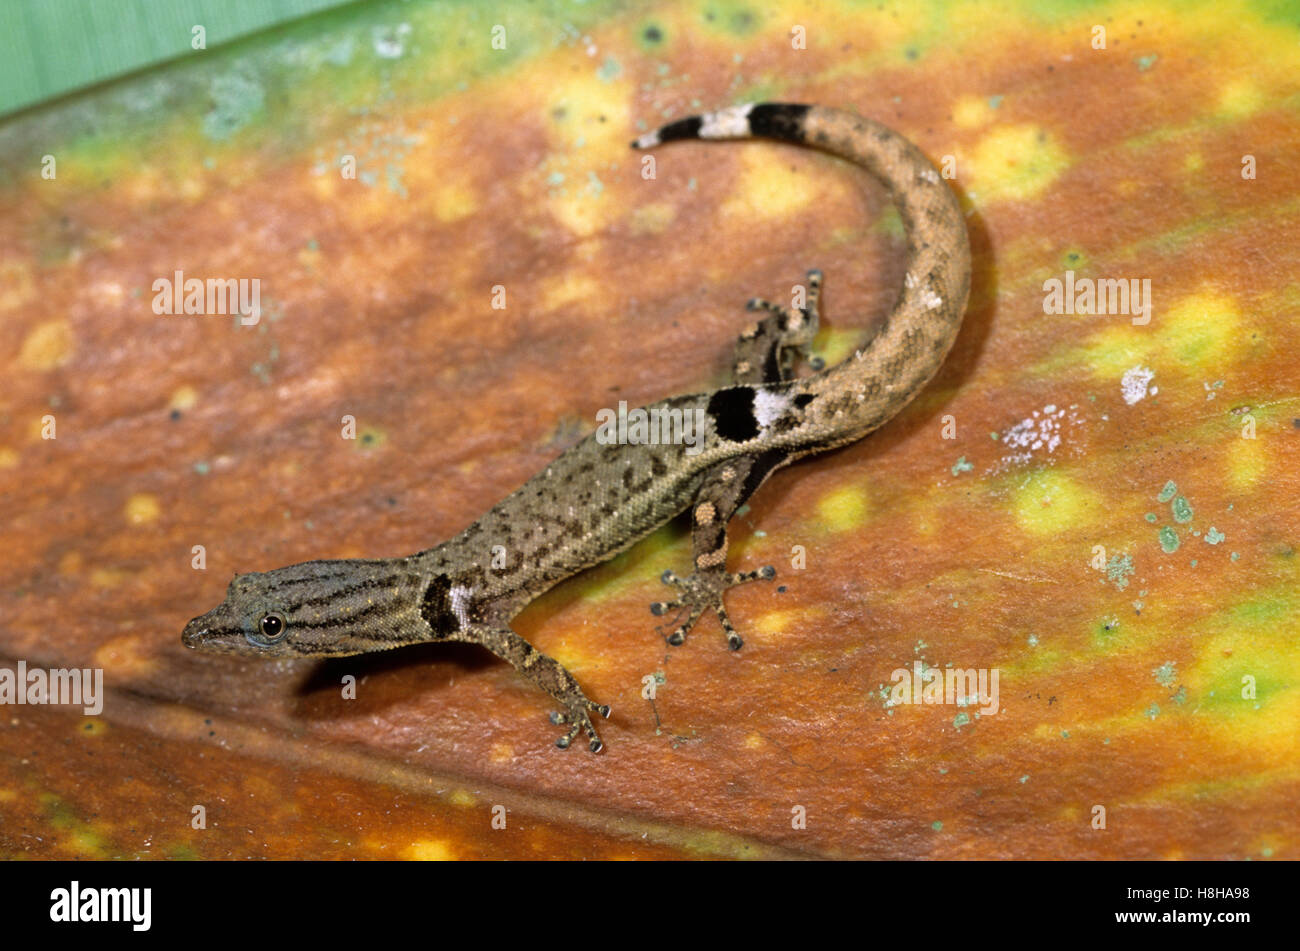 Spotted gecko (Sphaerodactylus millepunctatus), Nicaragua Stock Photo